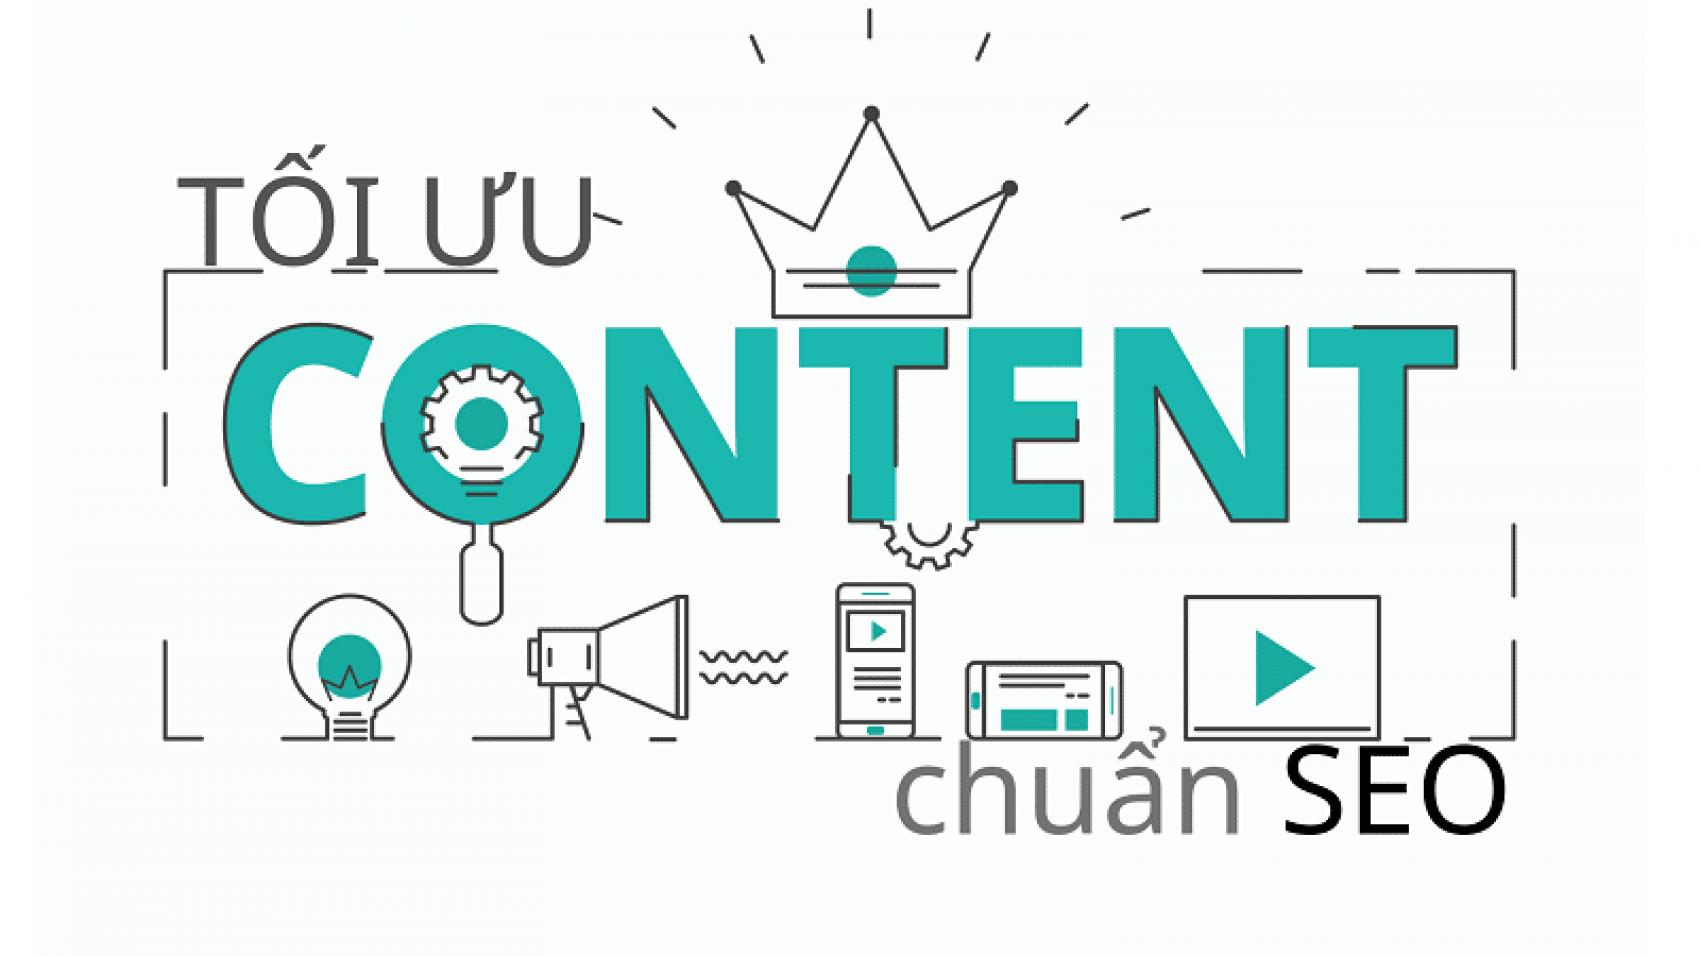 Huong-dan-cach-viet-Content-Marketing-chuan-SEO-hinh1